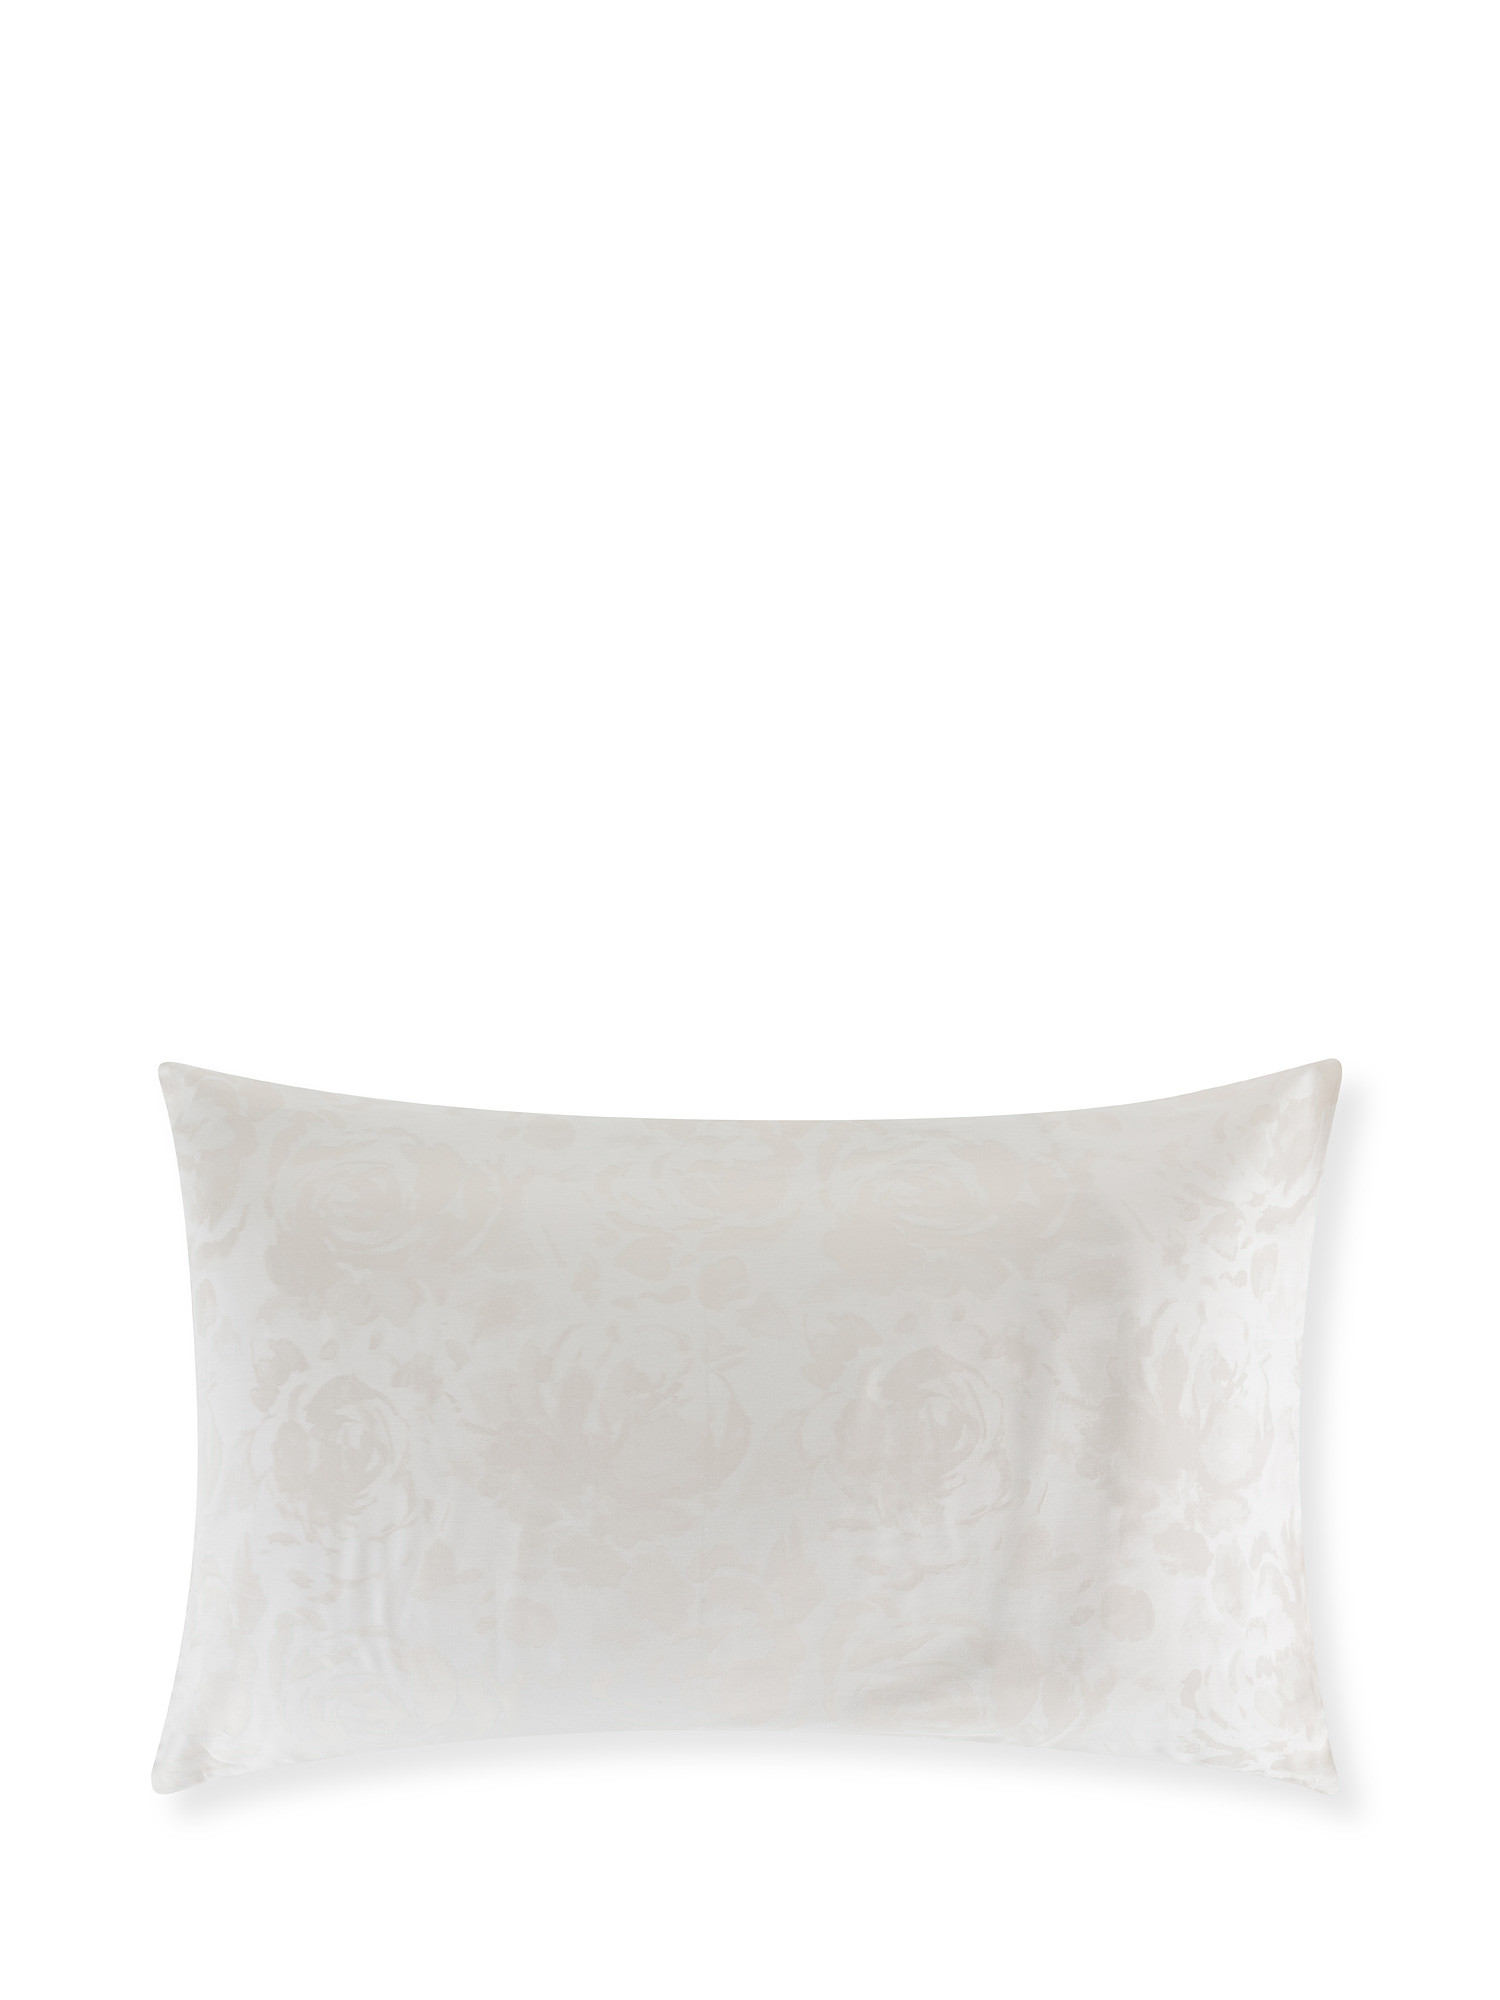 Portofino rose pillowcase in 100% cotton percale, Beige, large image number 0